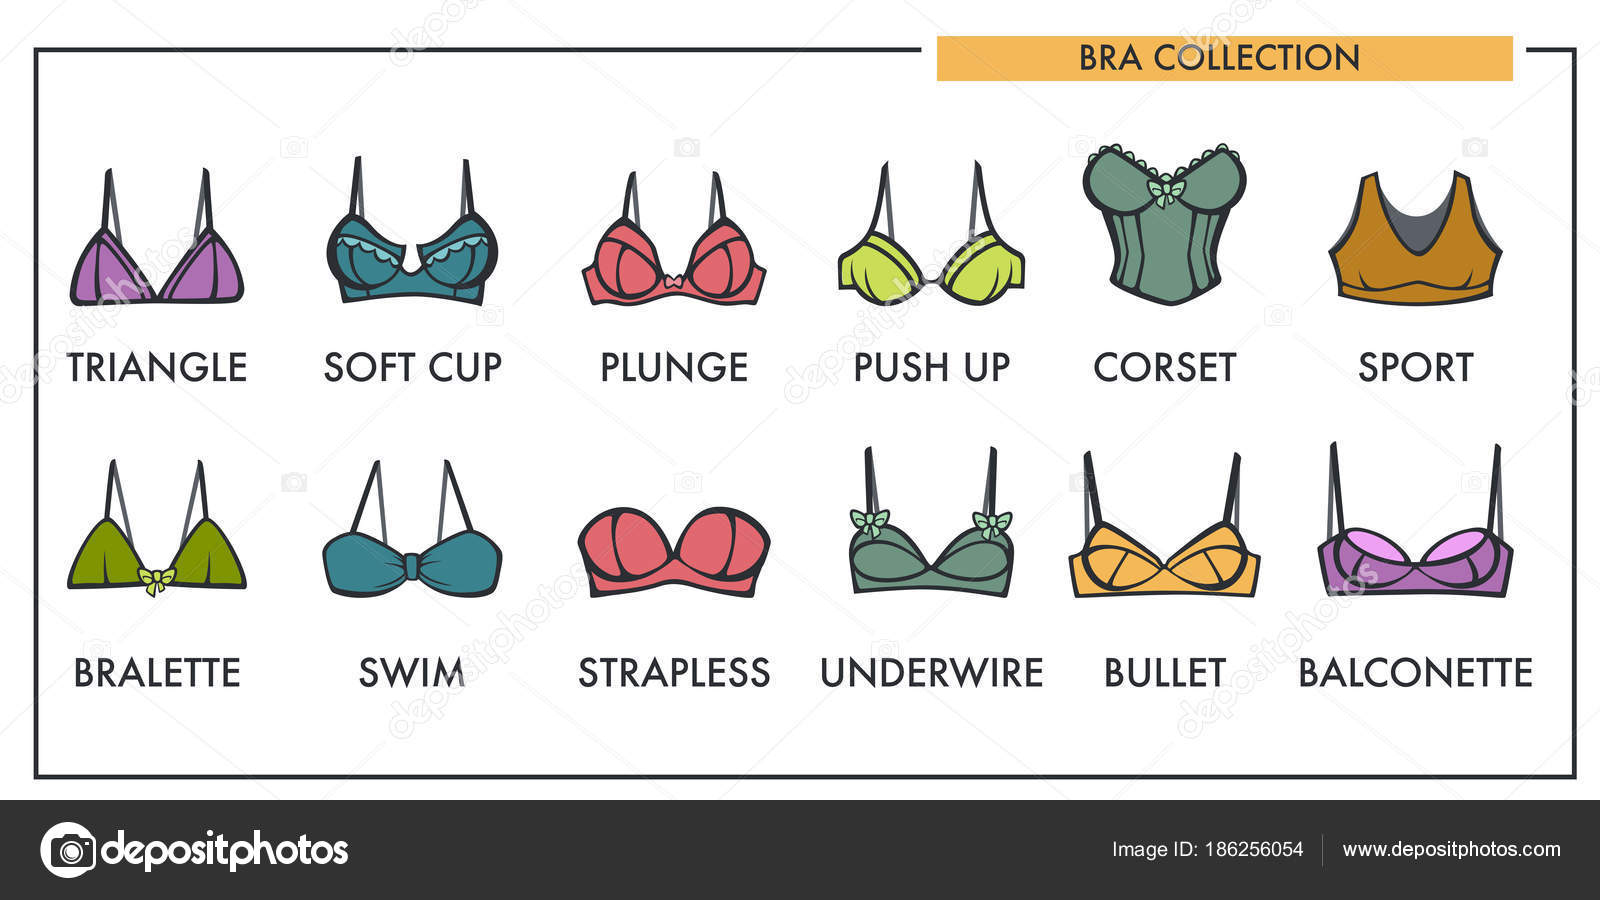 https://st3.depositphotos.com/1028367/18625/v/1600/depositphotos_186256054-stock-illustration-woman-bra-types-collection-vector.jpg